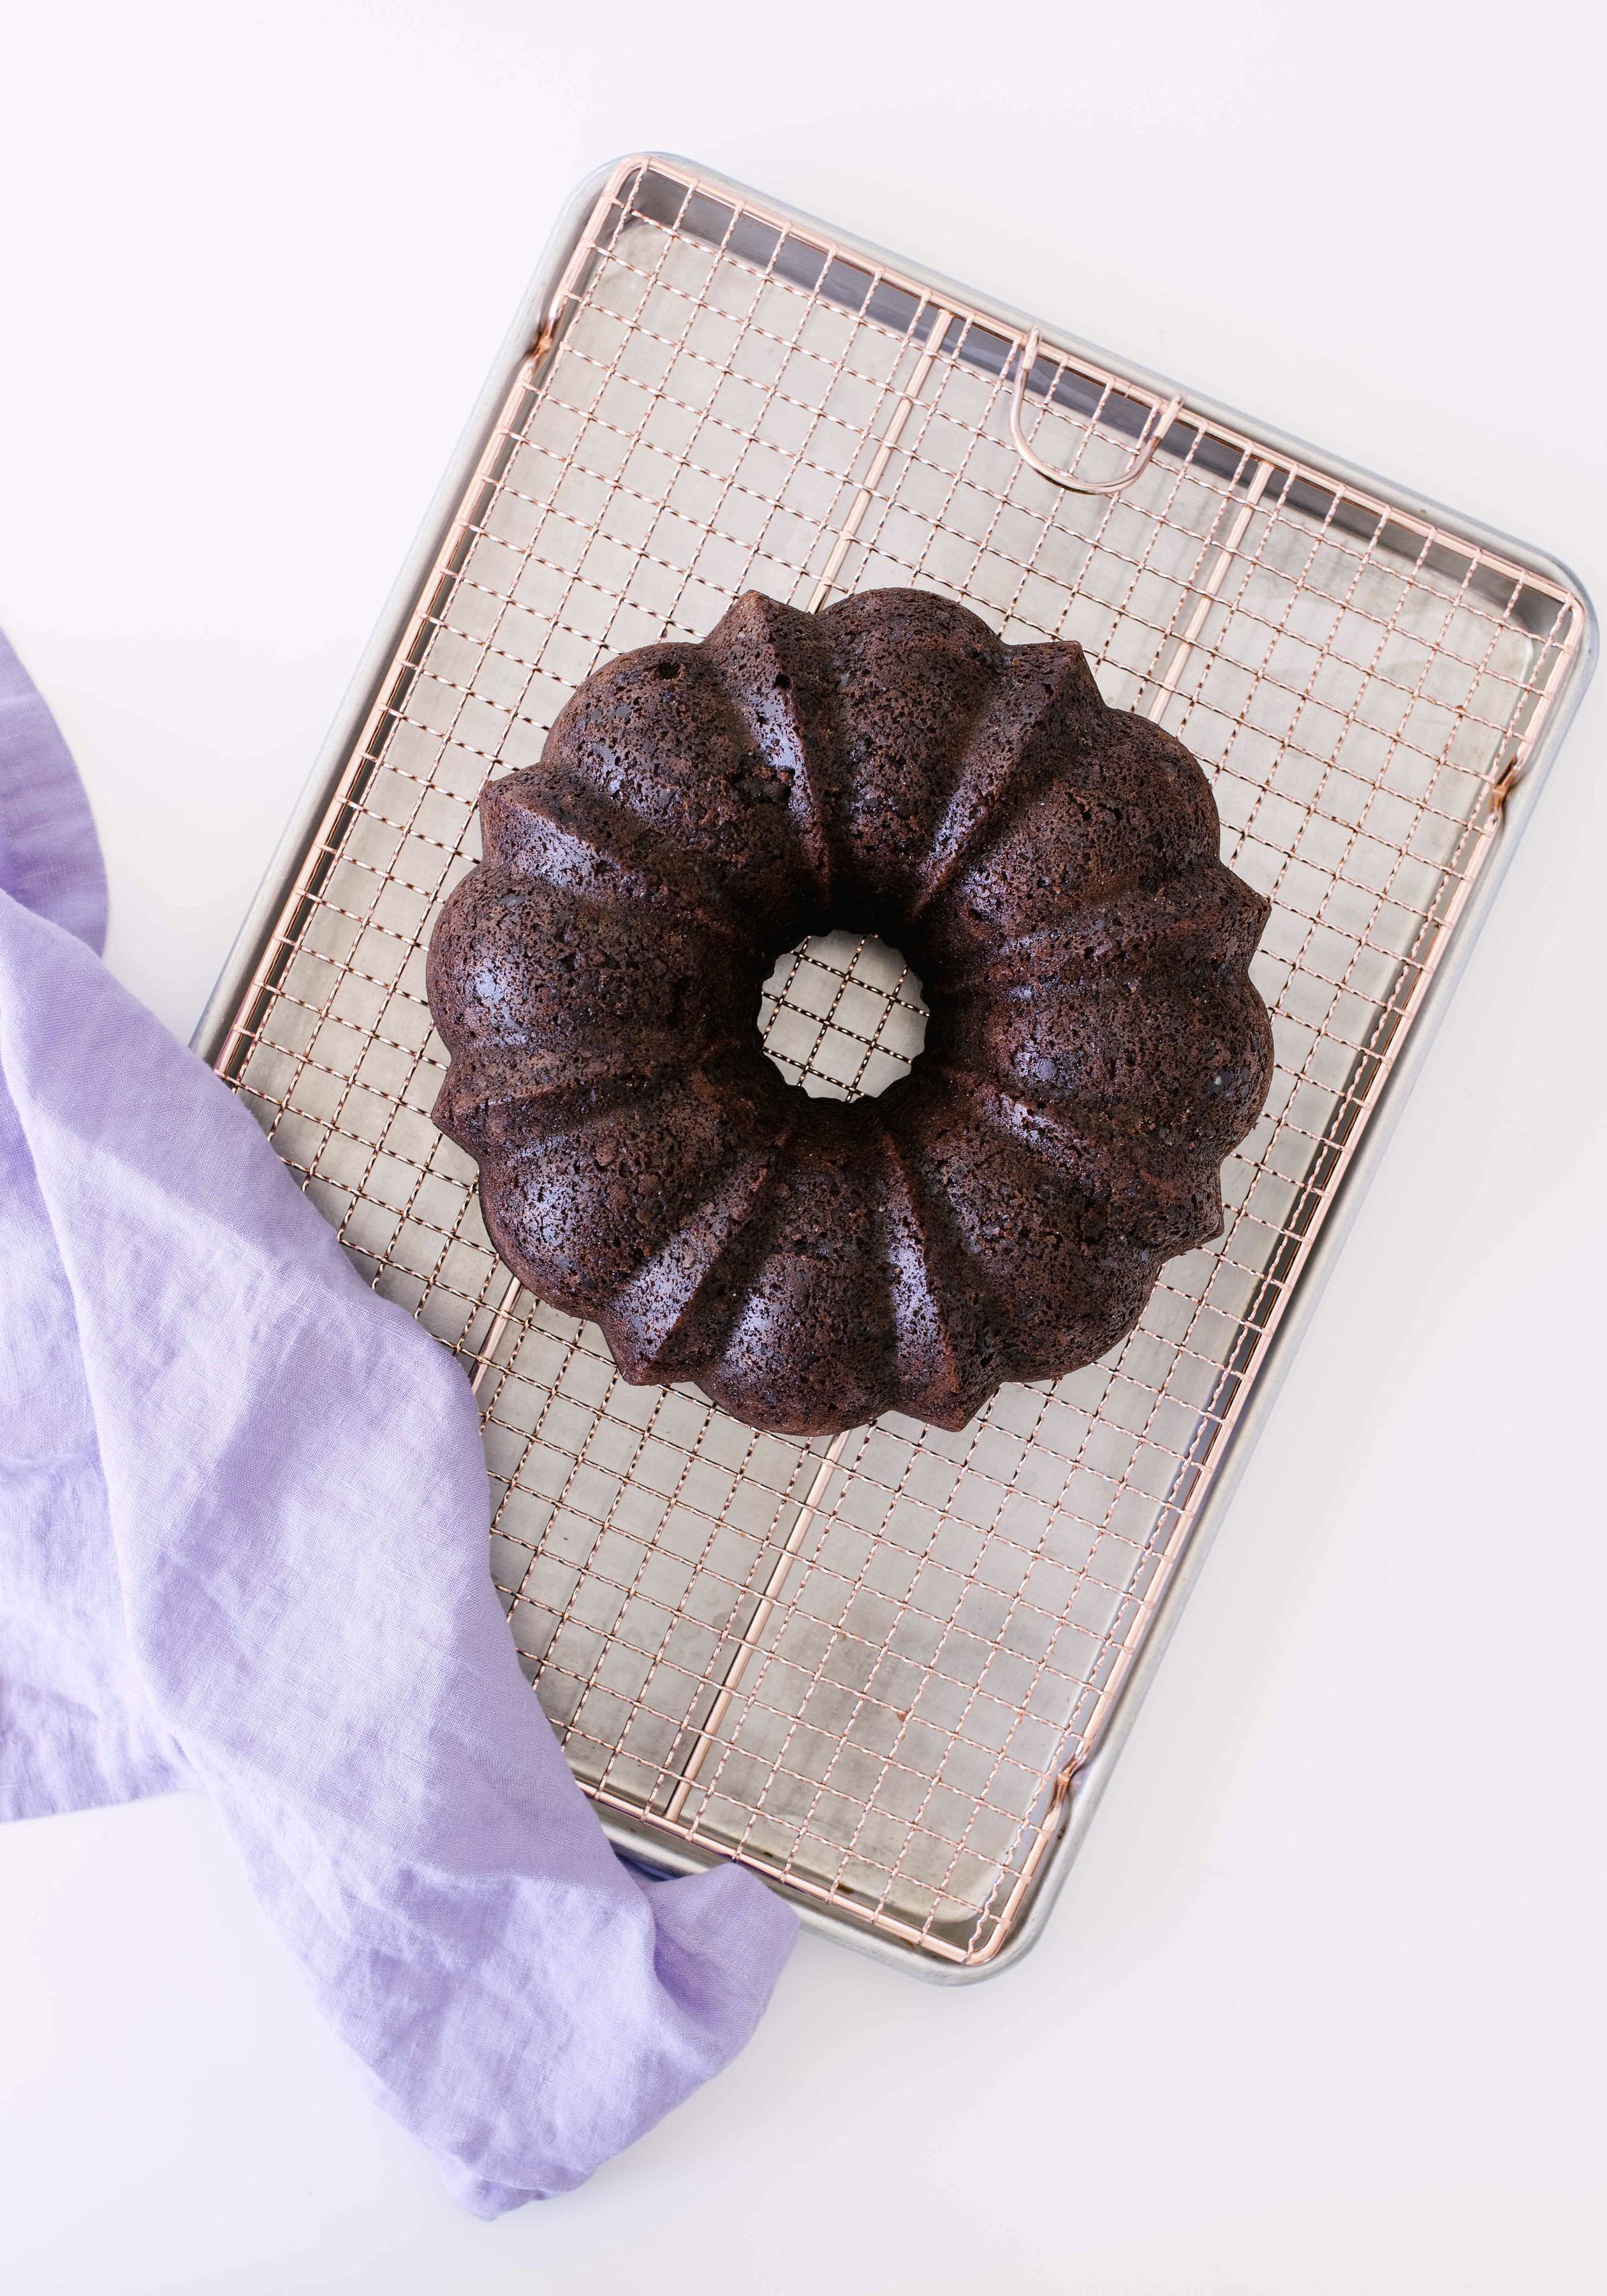 Top of Miss Jones Baking Co Dark Chocolate Coconut Bundt Cake on a baking sheet next to a purple towel